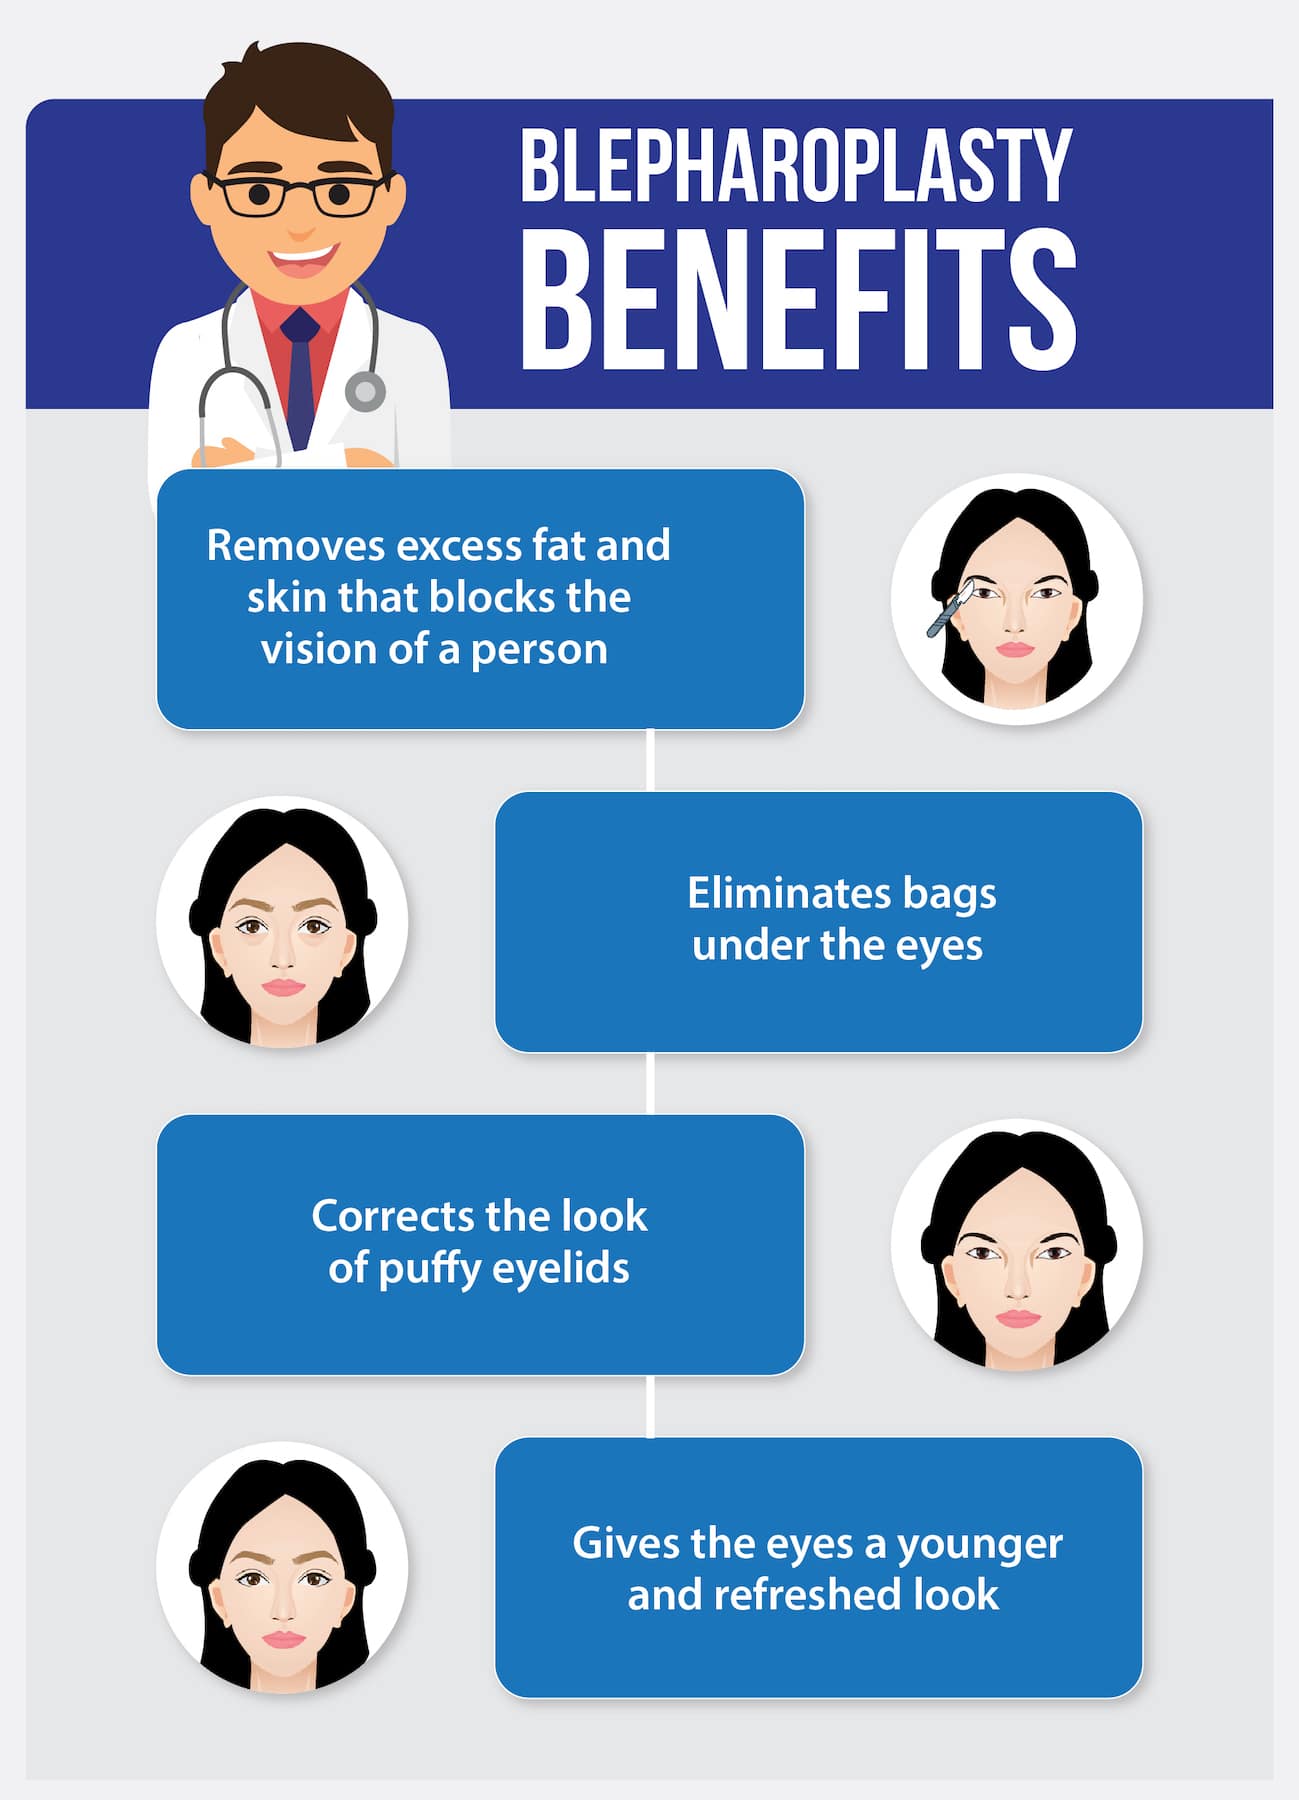 Common Benefits of Blepharoplasty